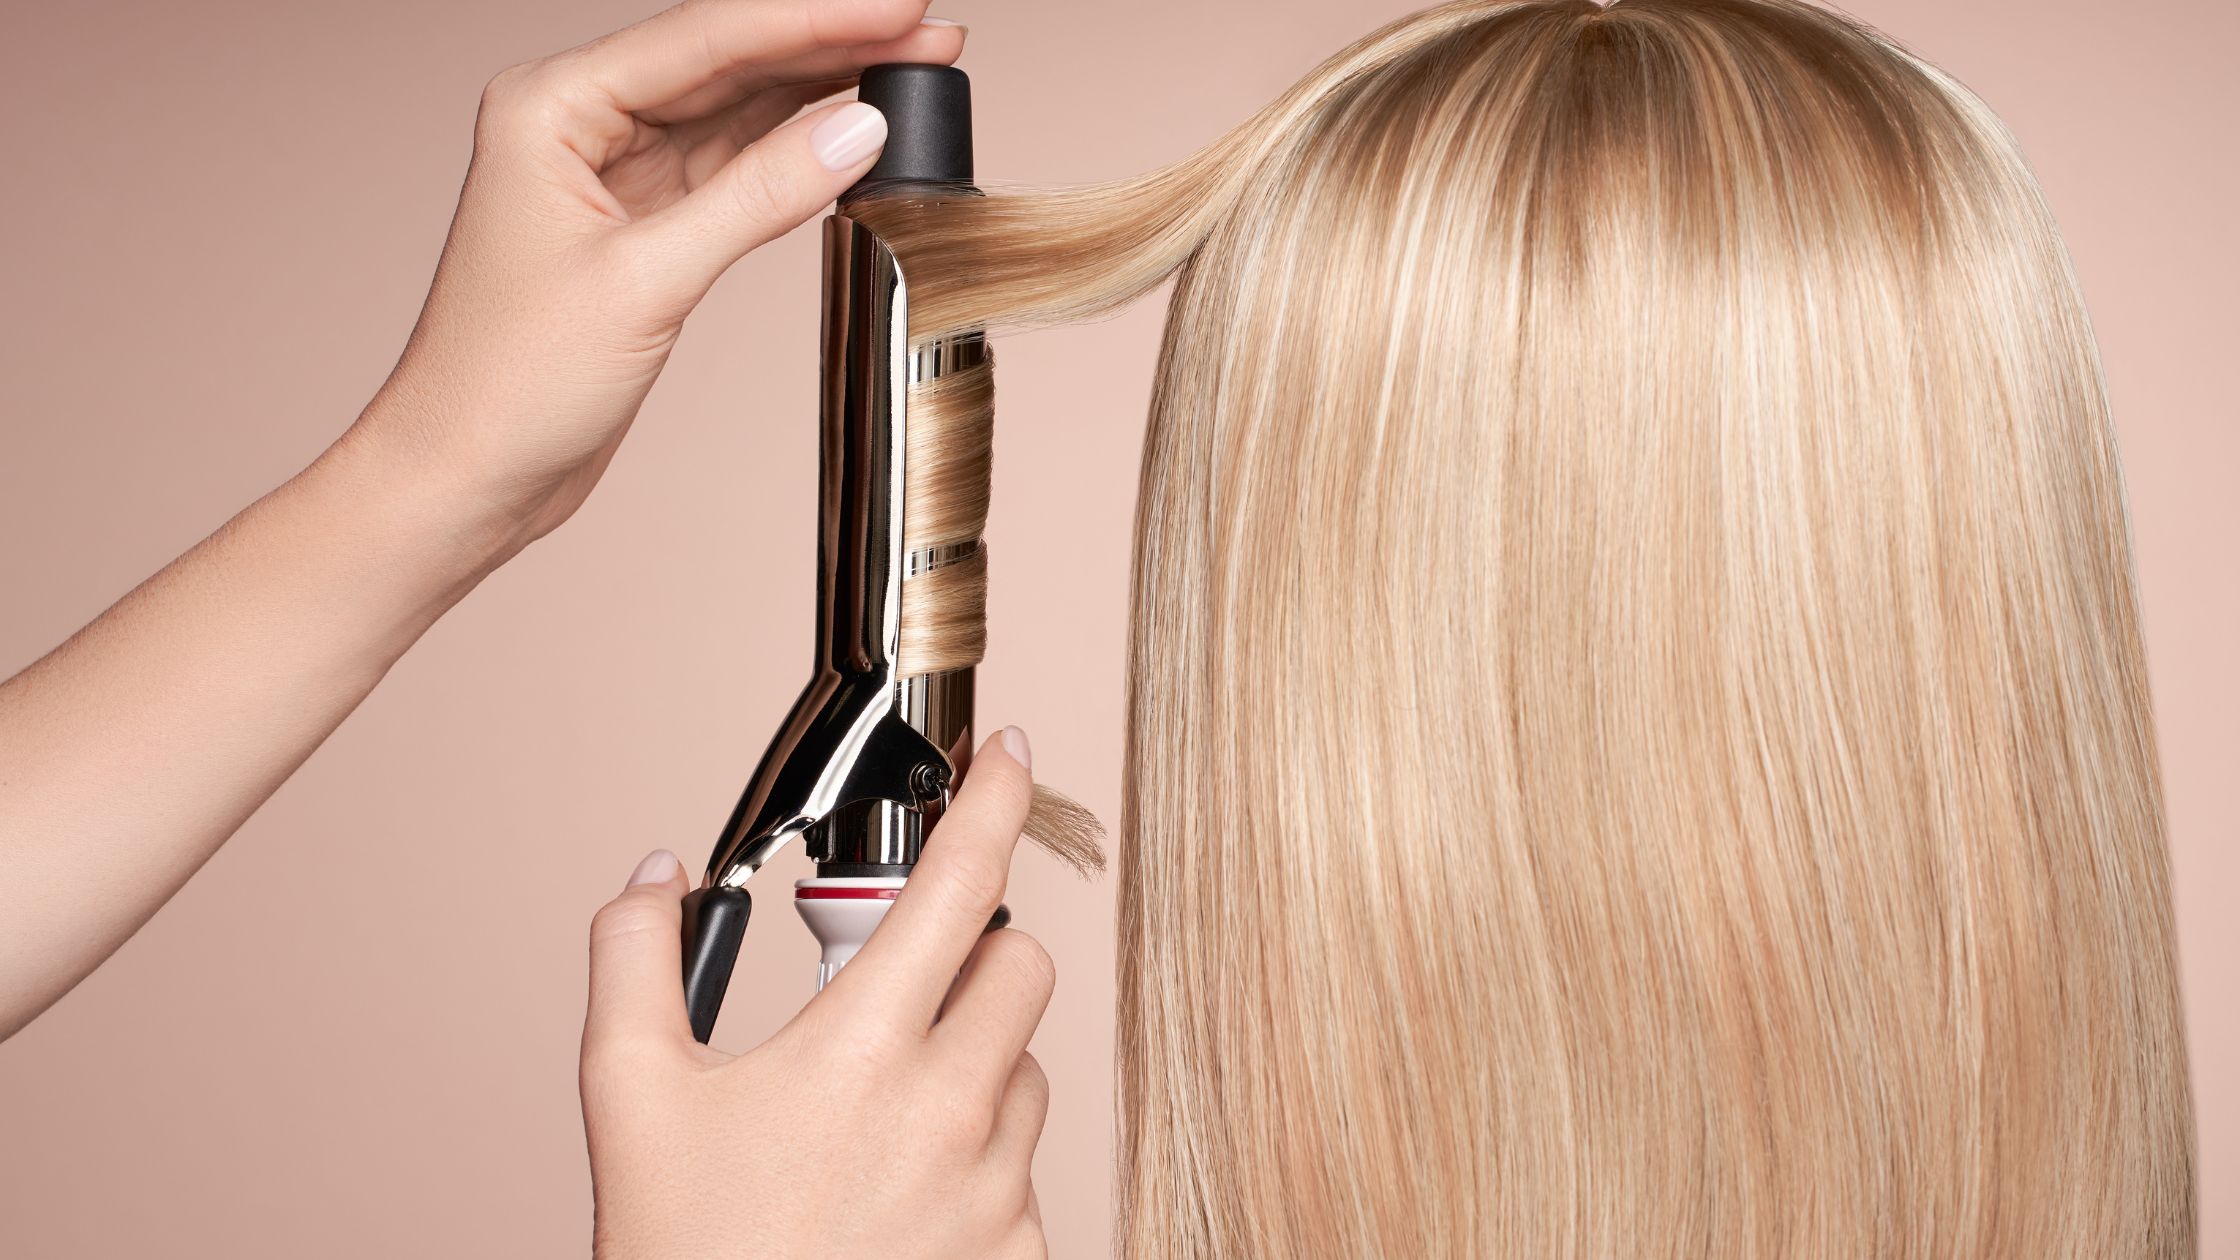 Hairdresser using curling iron on customer's hair